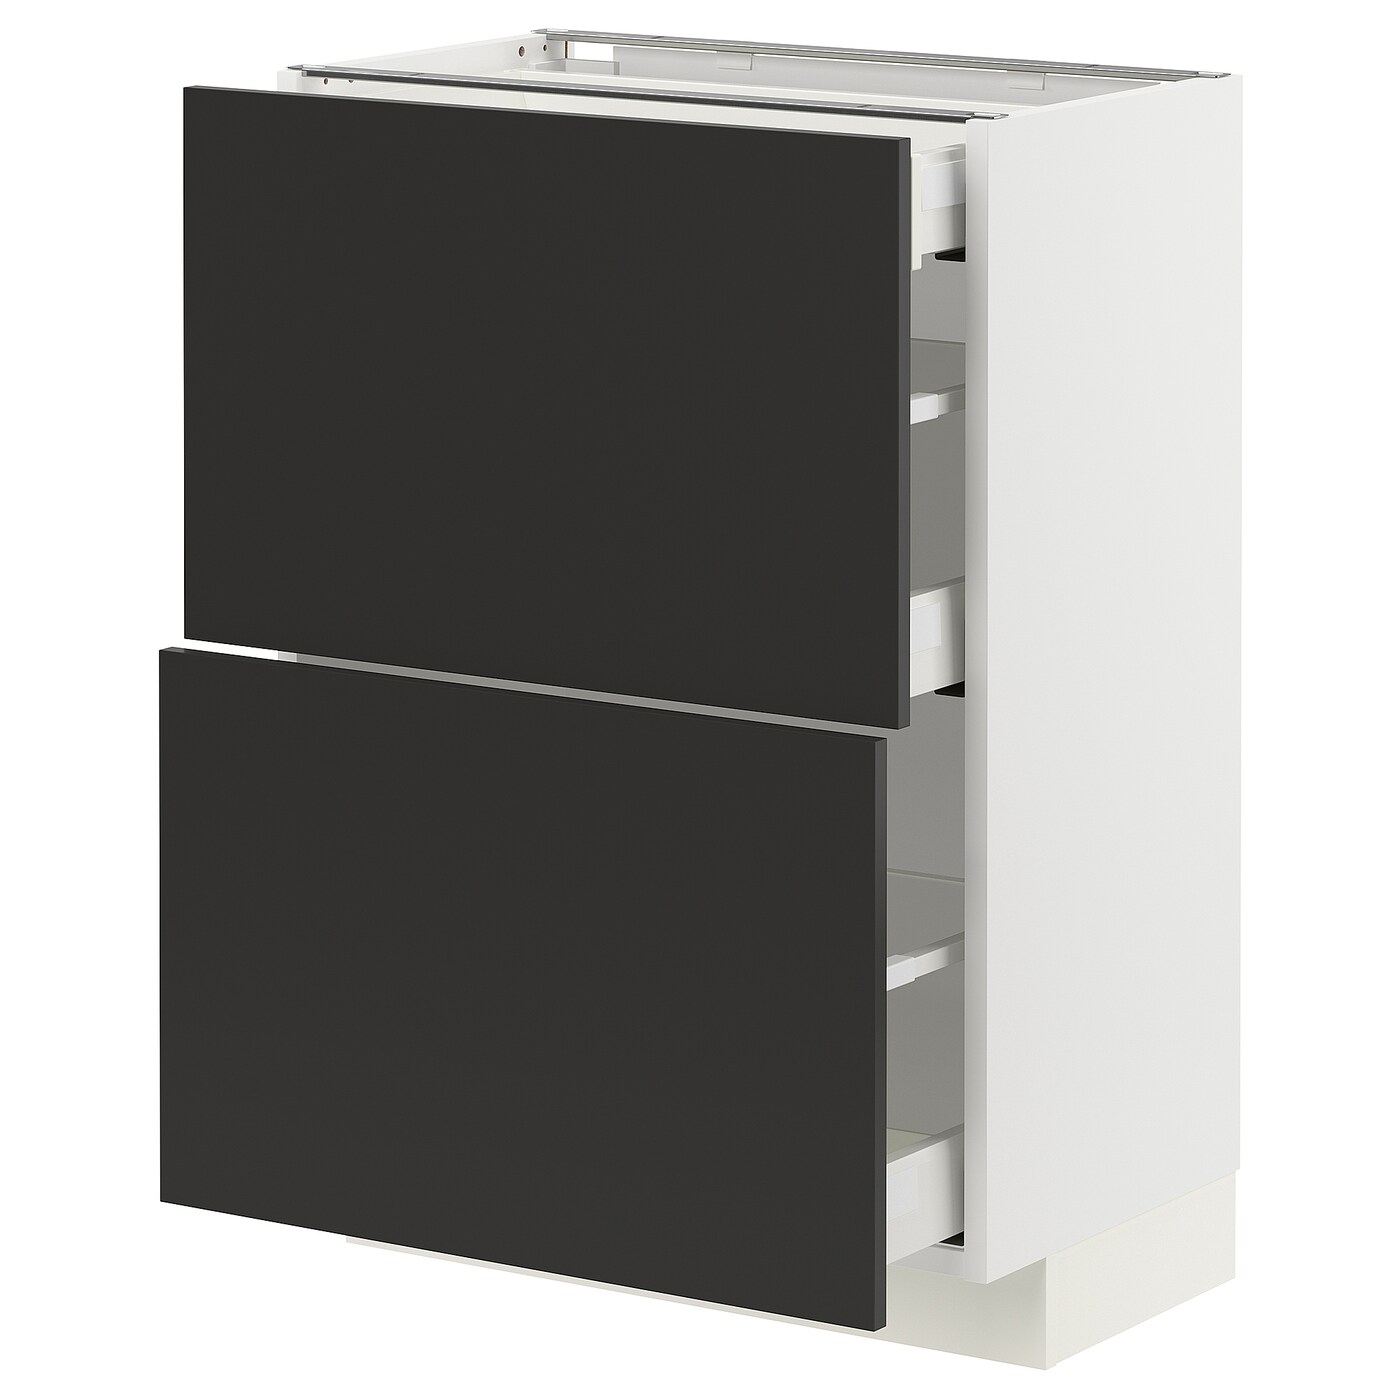 Нижний шкаф - METOD / MAXIMERA IKEA/ МЕТОД / МАКСИМЕРА ИКЕА, 88х60 см, белый/черный